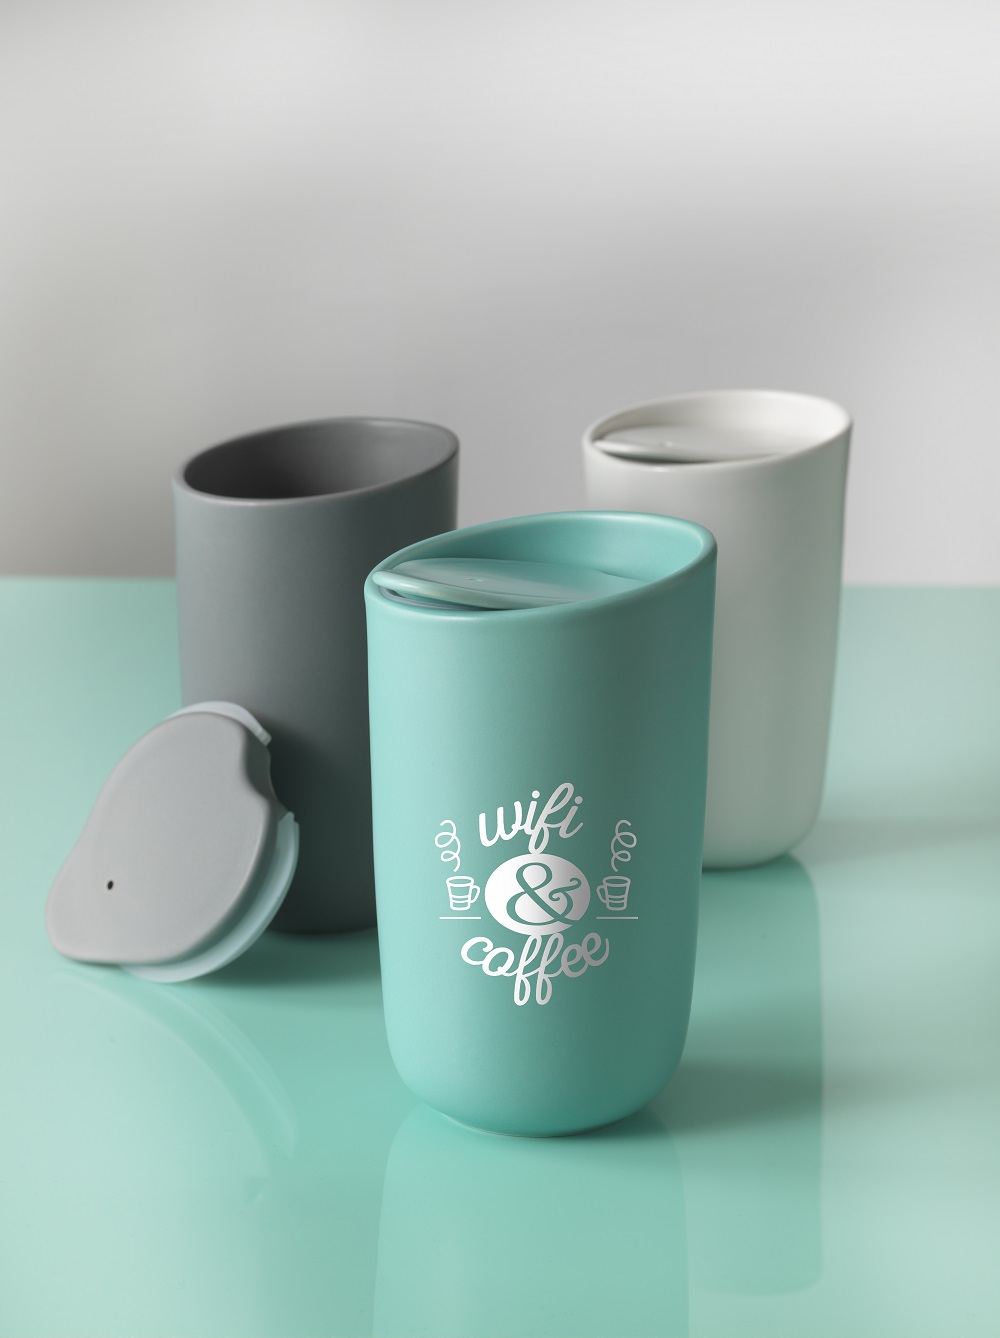 MECHANEX 2019 branded takeaway mugs